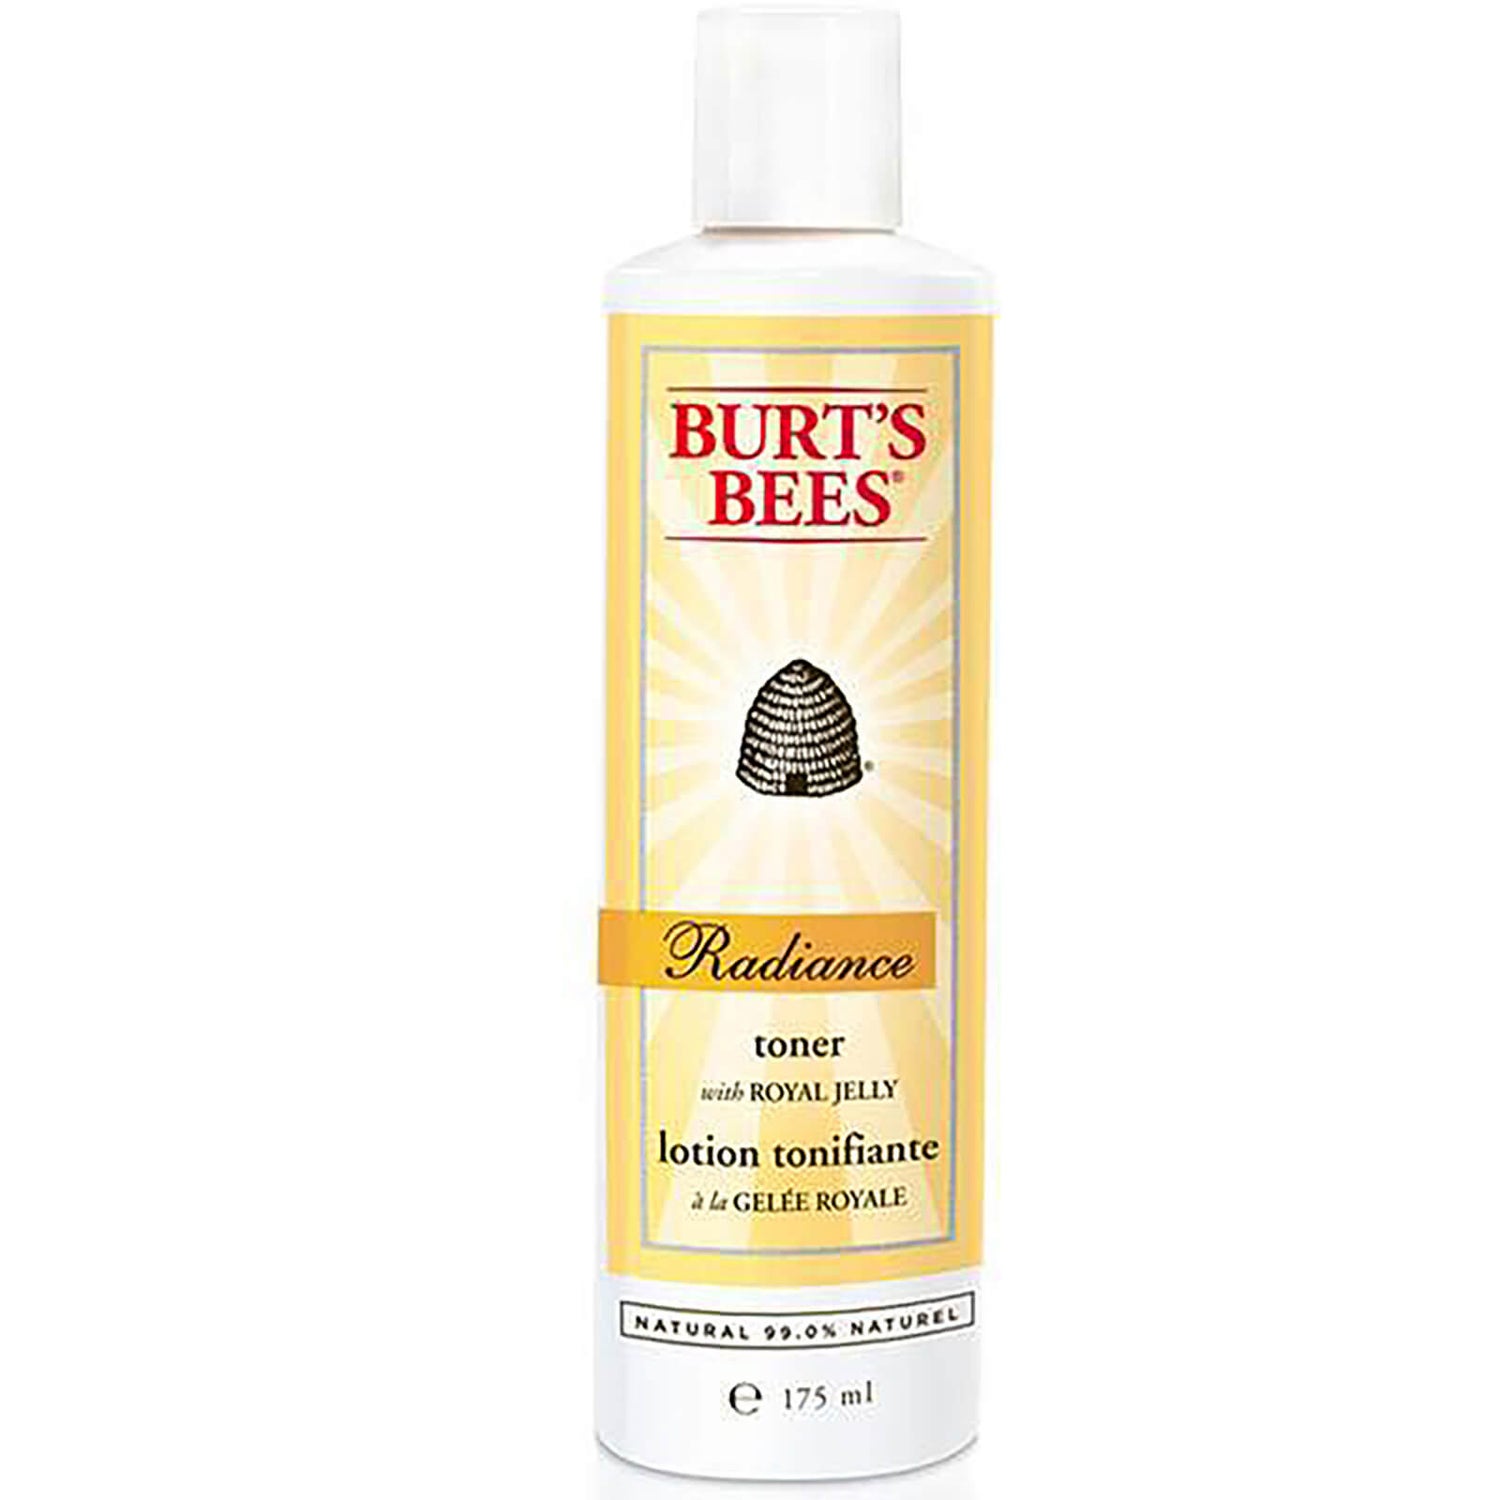 Burt's Bees Radiance Toner oz 6fl